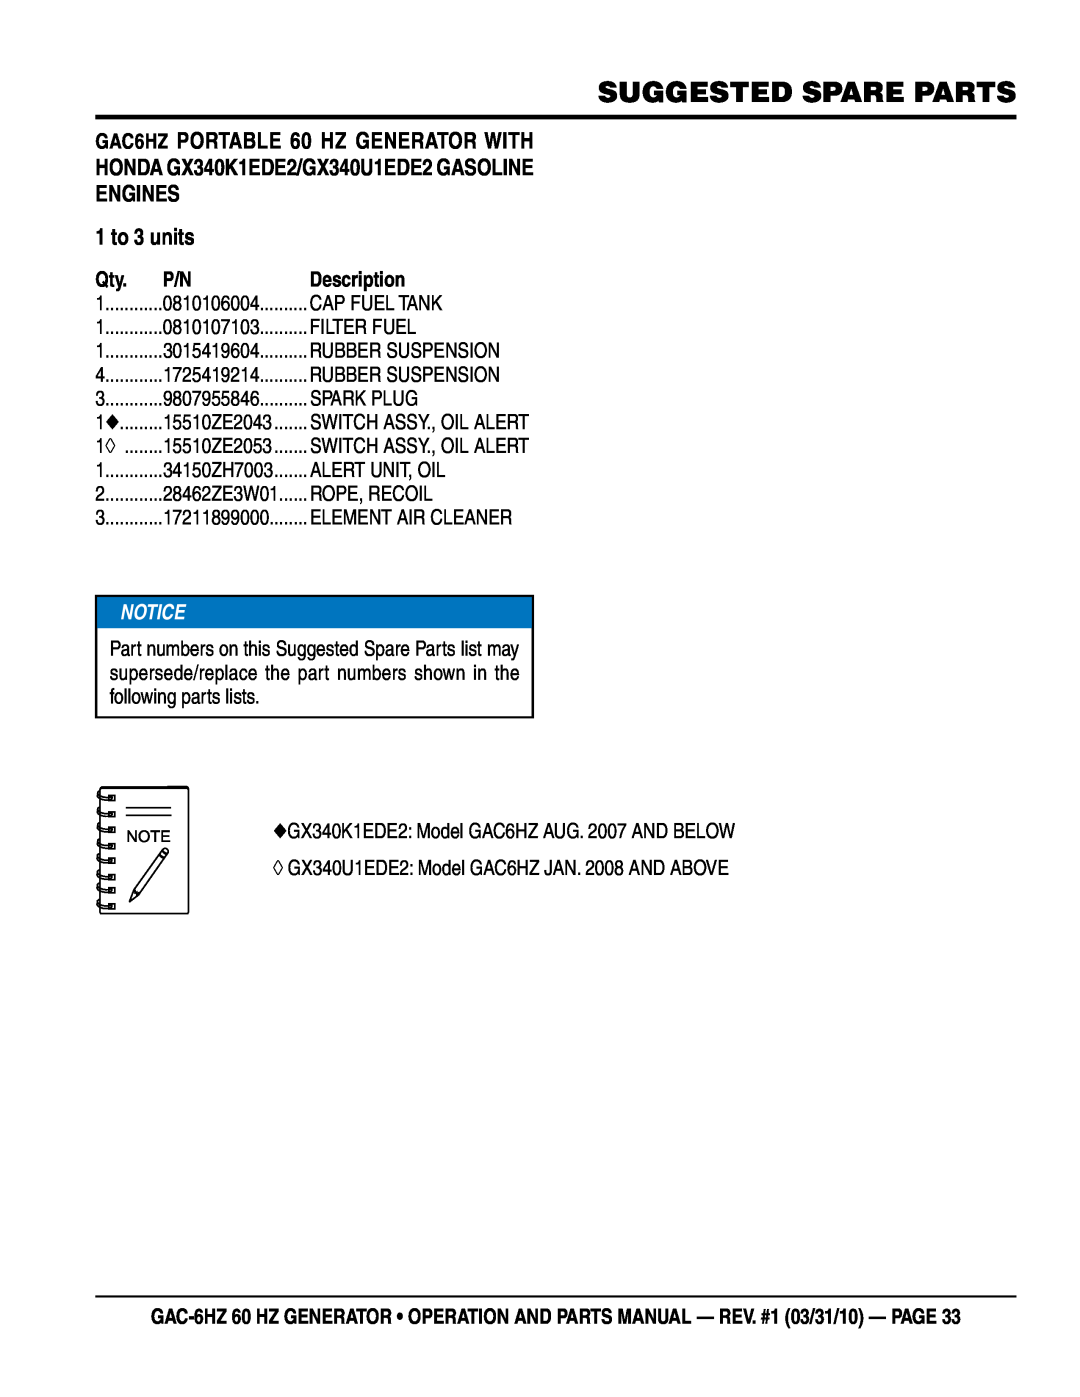 Multiquip GAC6HZ manual Suggested Spare Parts, 1 to 3 units, description 